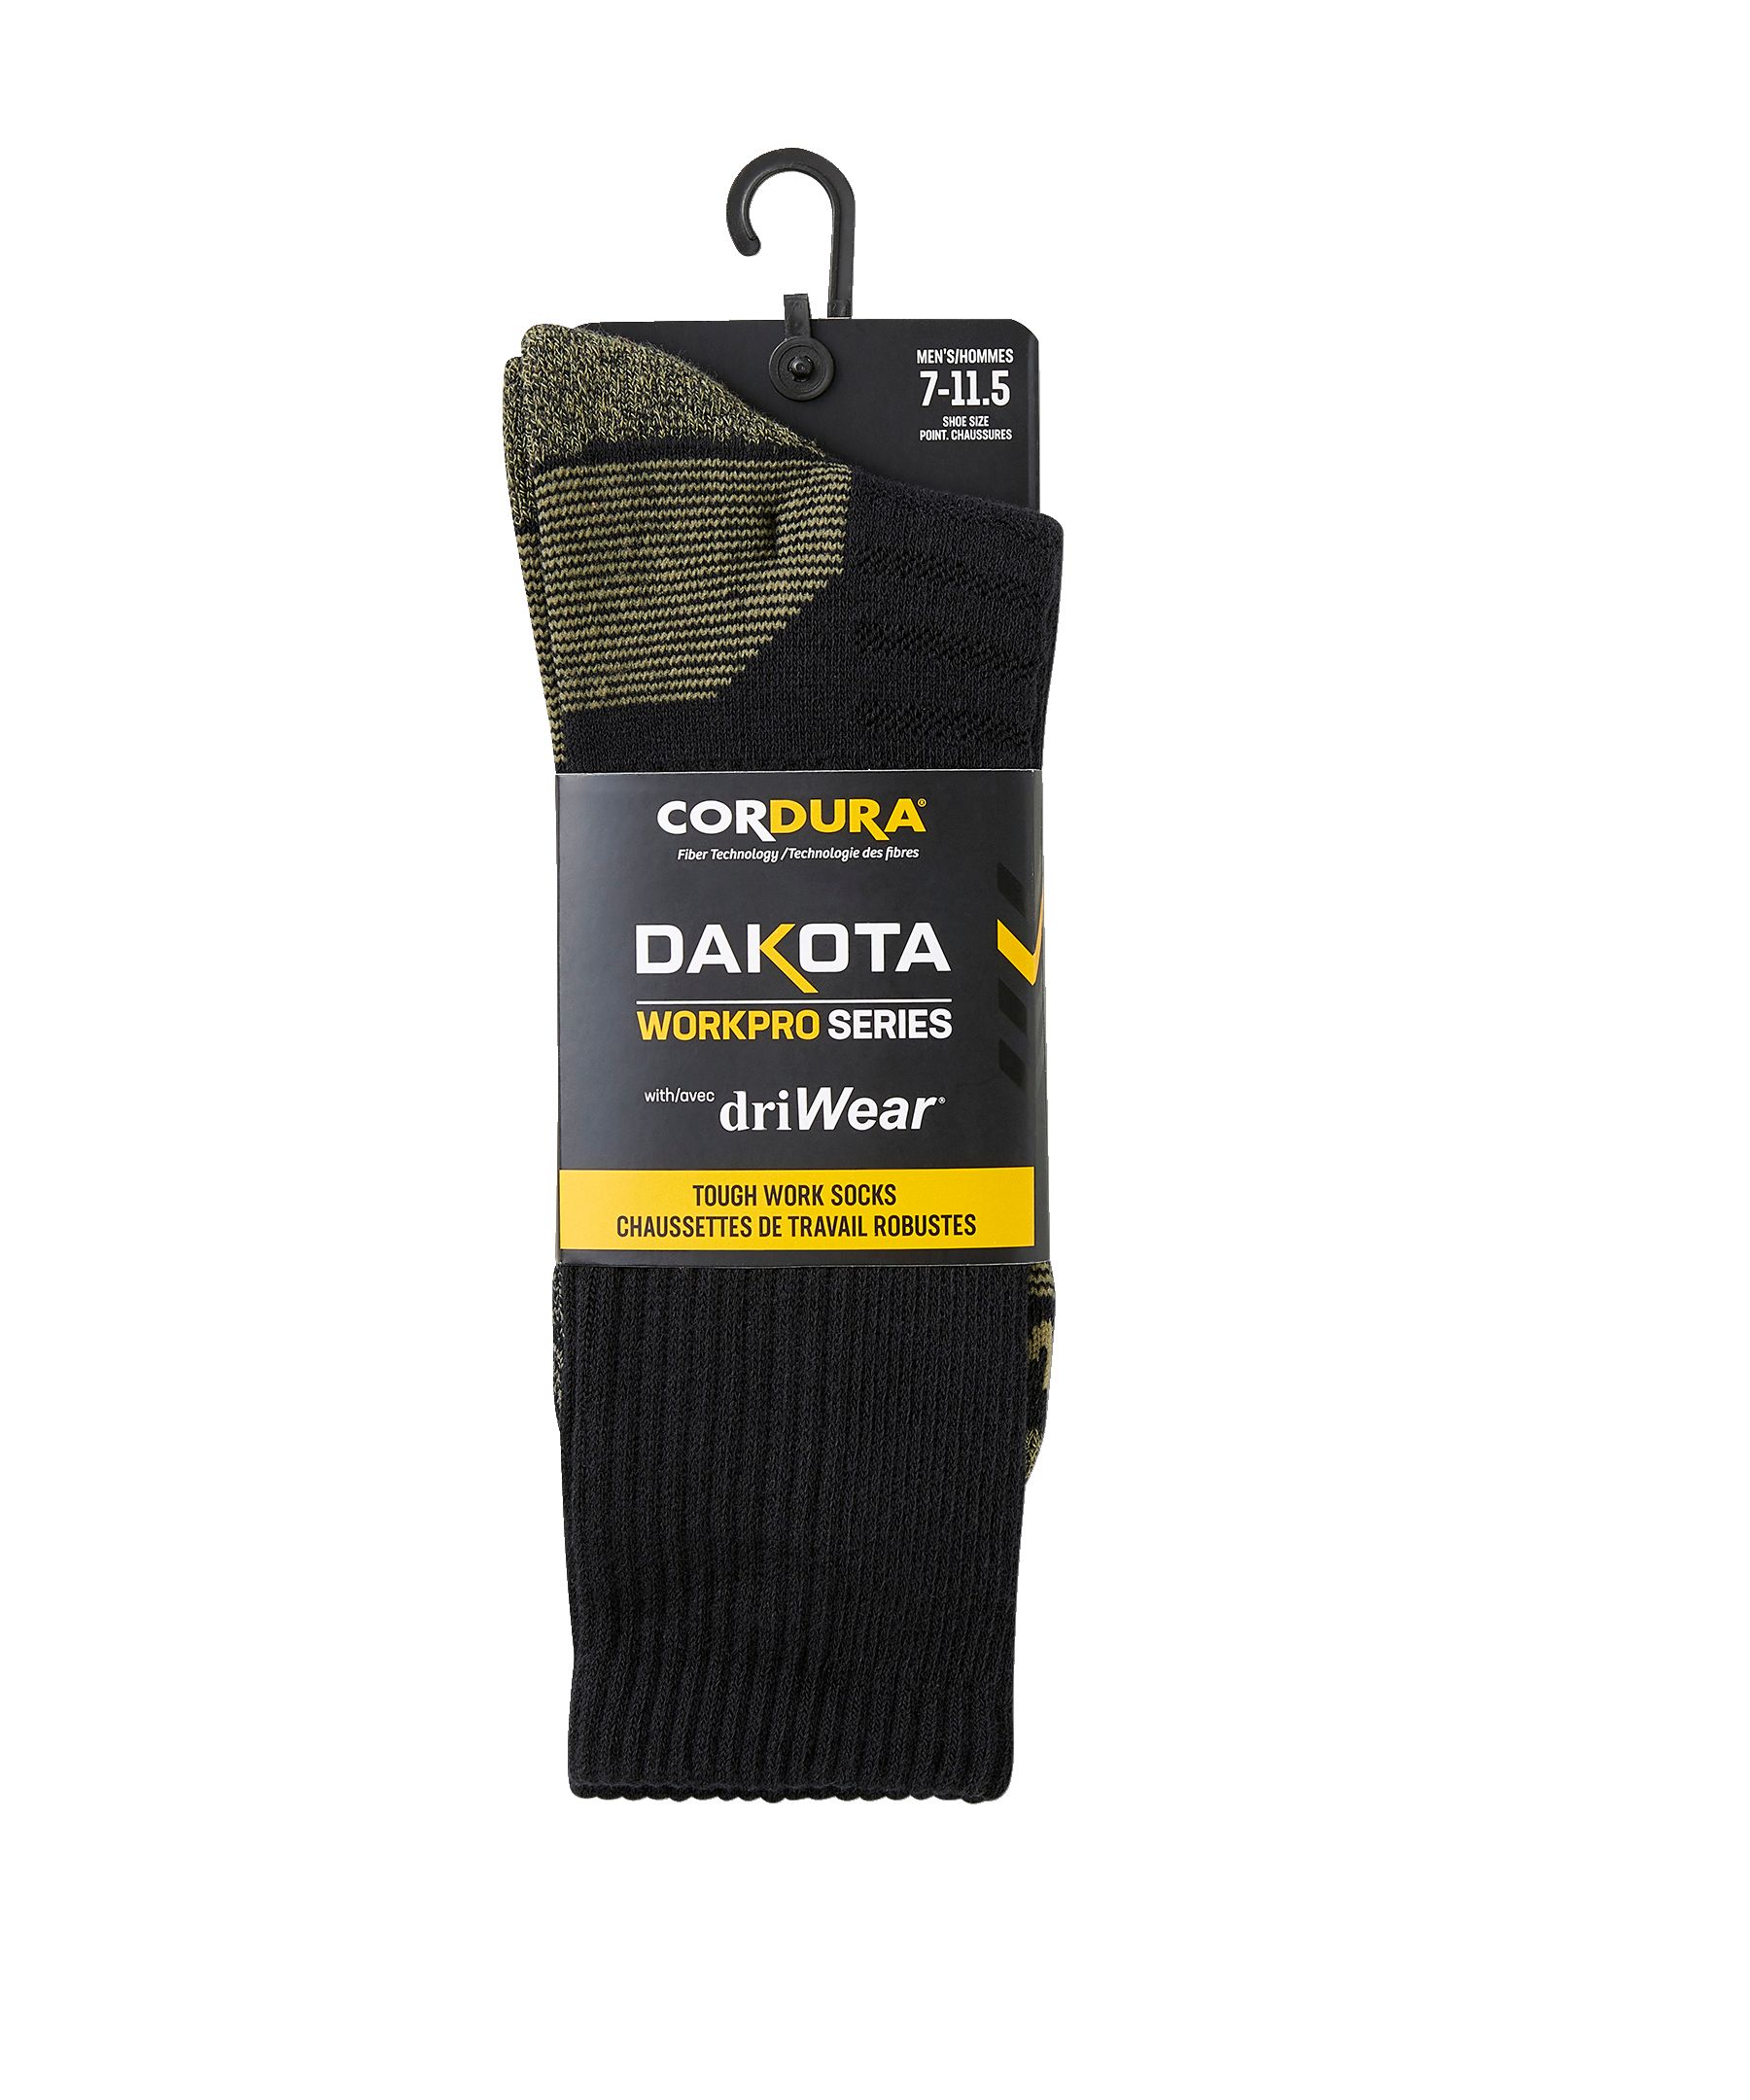 https://media-www.marks.com/product/marks-work-wearhouse/industrial-world/mens-socks/410036357014/dakota-workpro-series-men-s-driwear-cordura-blend-work-boot-socks-9c0ea7a3-983a-400c-a6af-4f6709c71058-jpgrendition.jpg